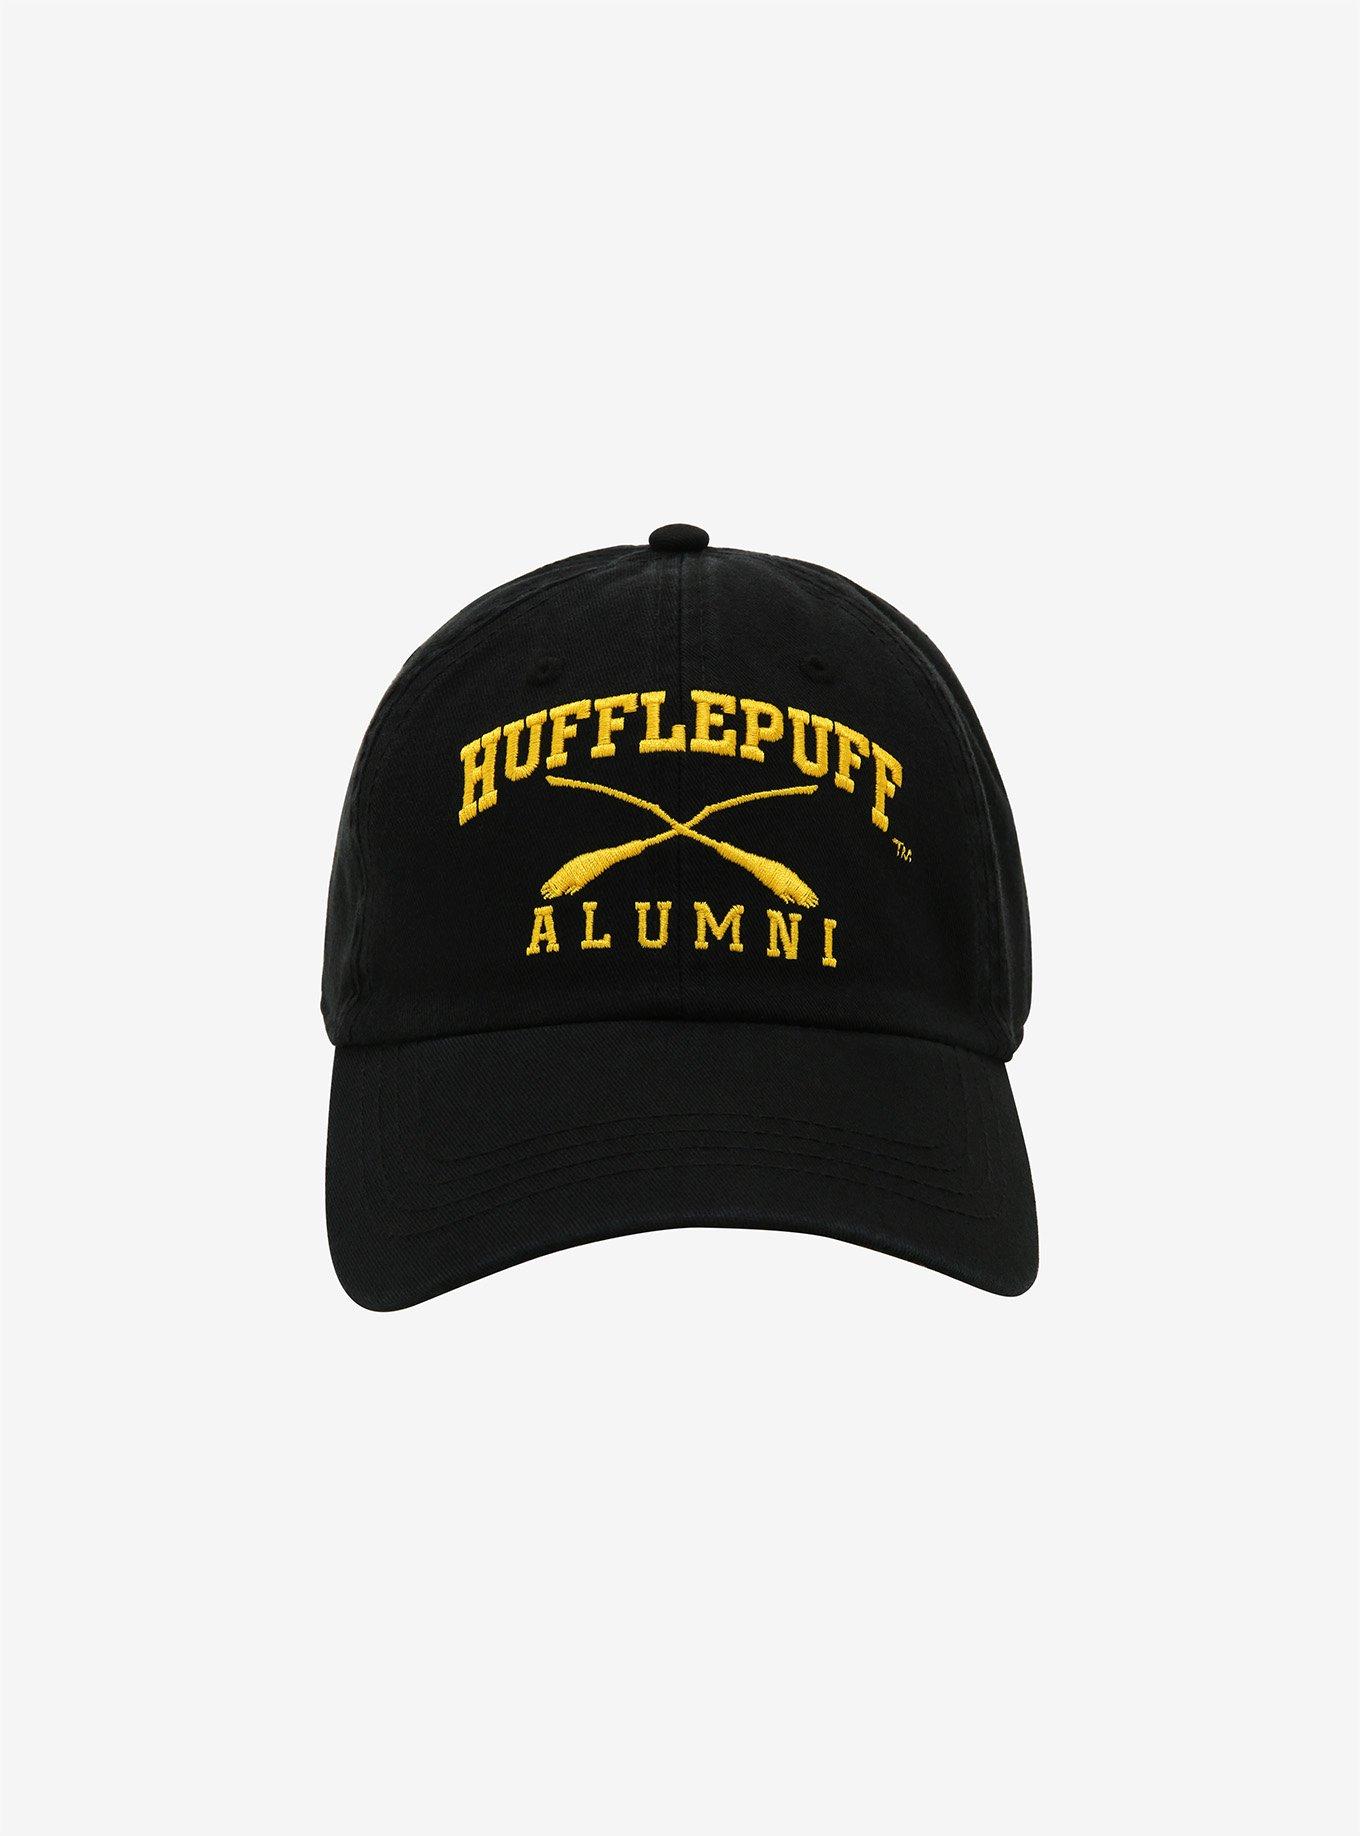 BoxLunch | BoxLunch Potter Hufflepuff - Harry Cap Exclusive Alumni